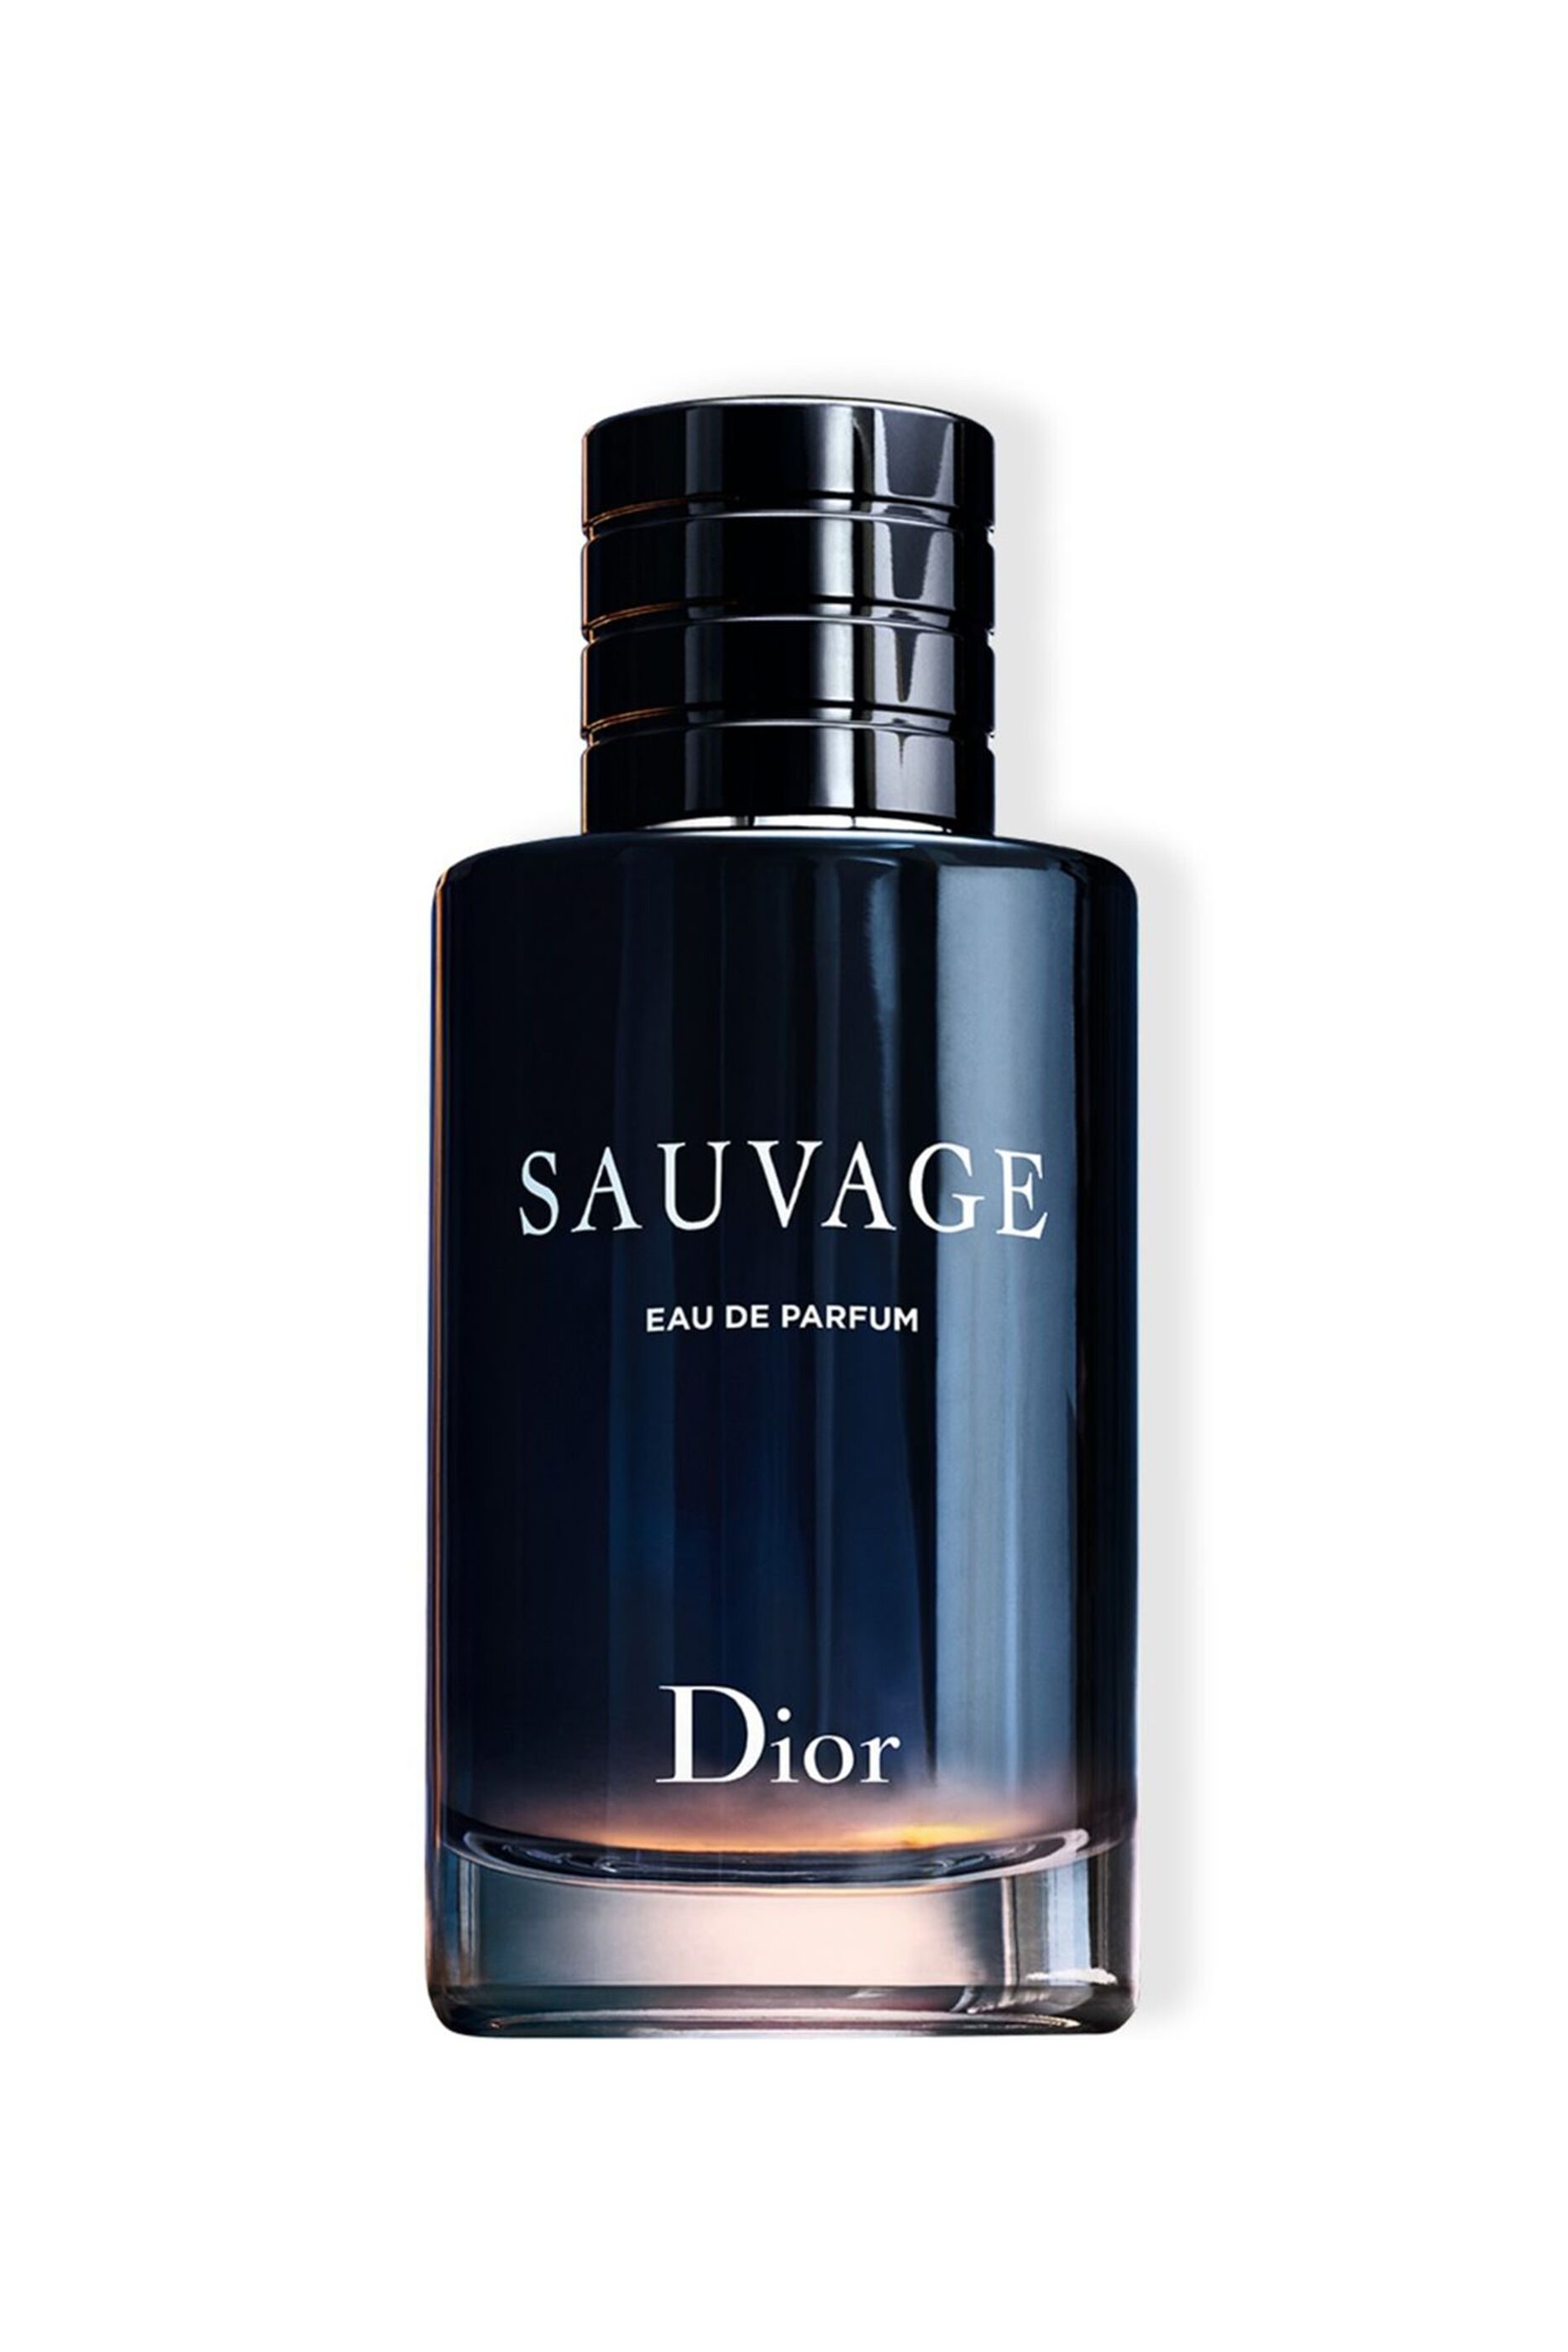 Buy Dior Sauvage Eau de Parfum for 